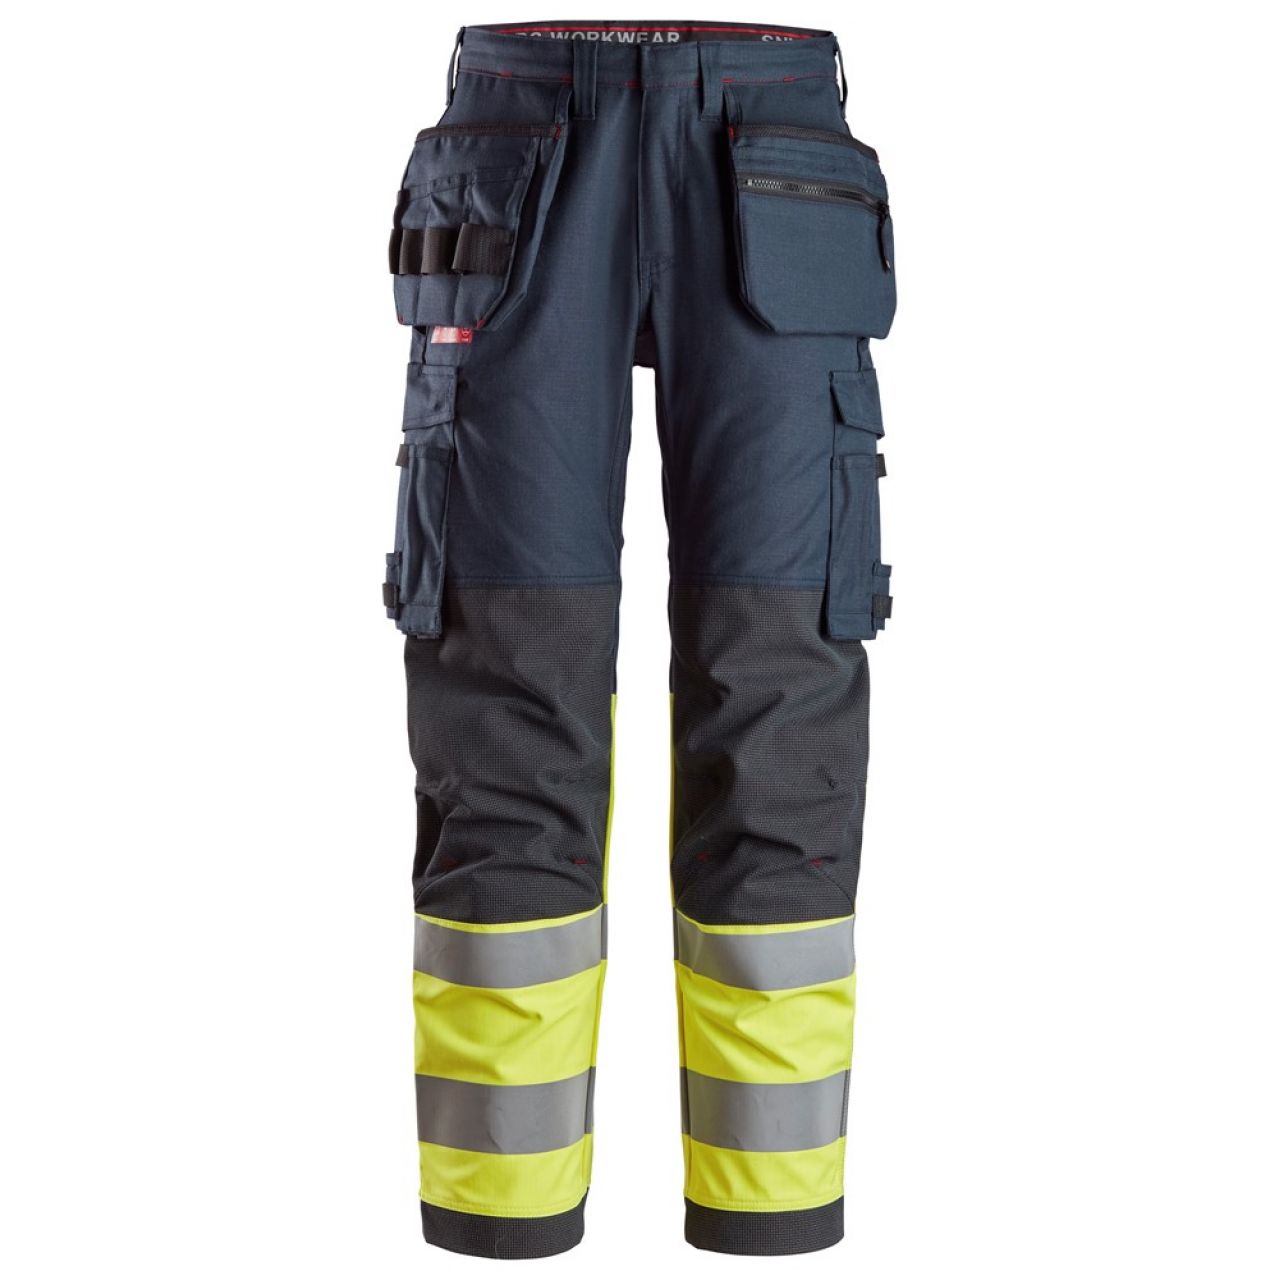 6263 Pantalones largos de trabajo de alta visibilidad clase 1 con bolsillos flotantes ProtecWork azul marino-amarillo talla 112